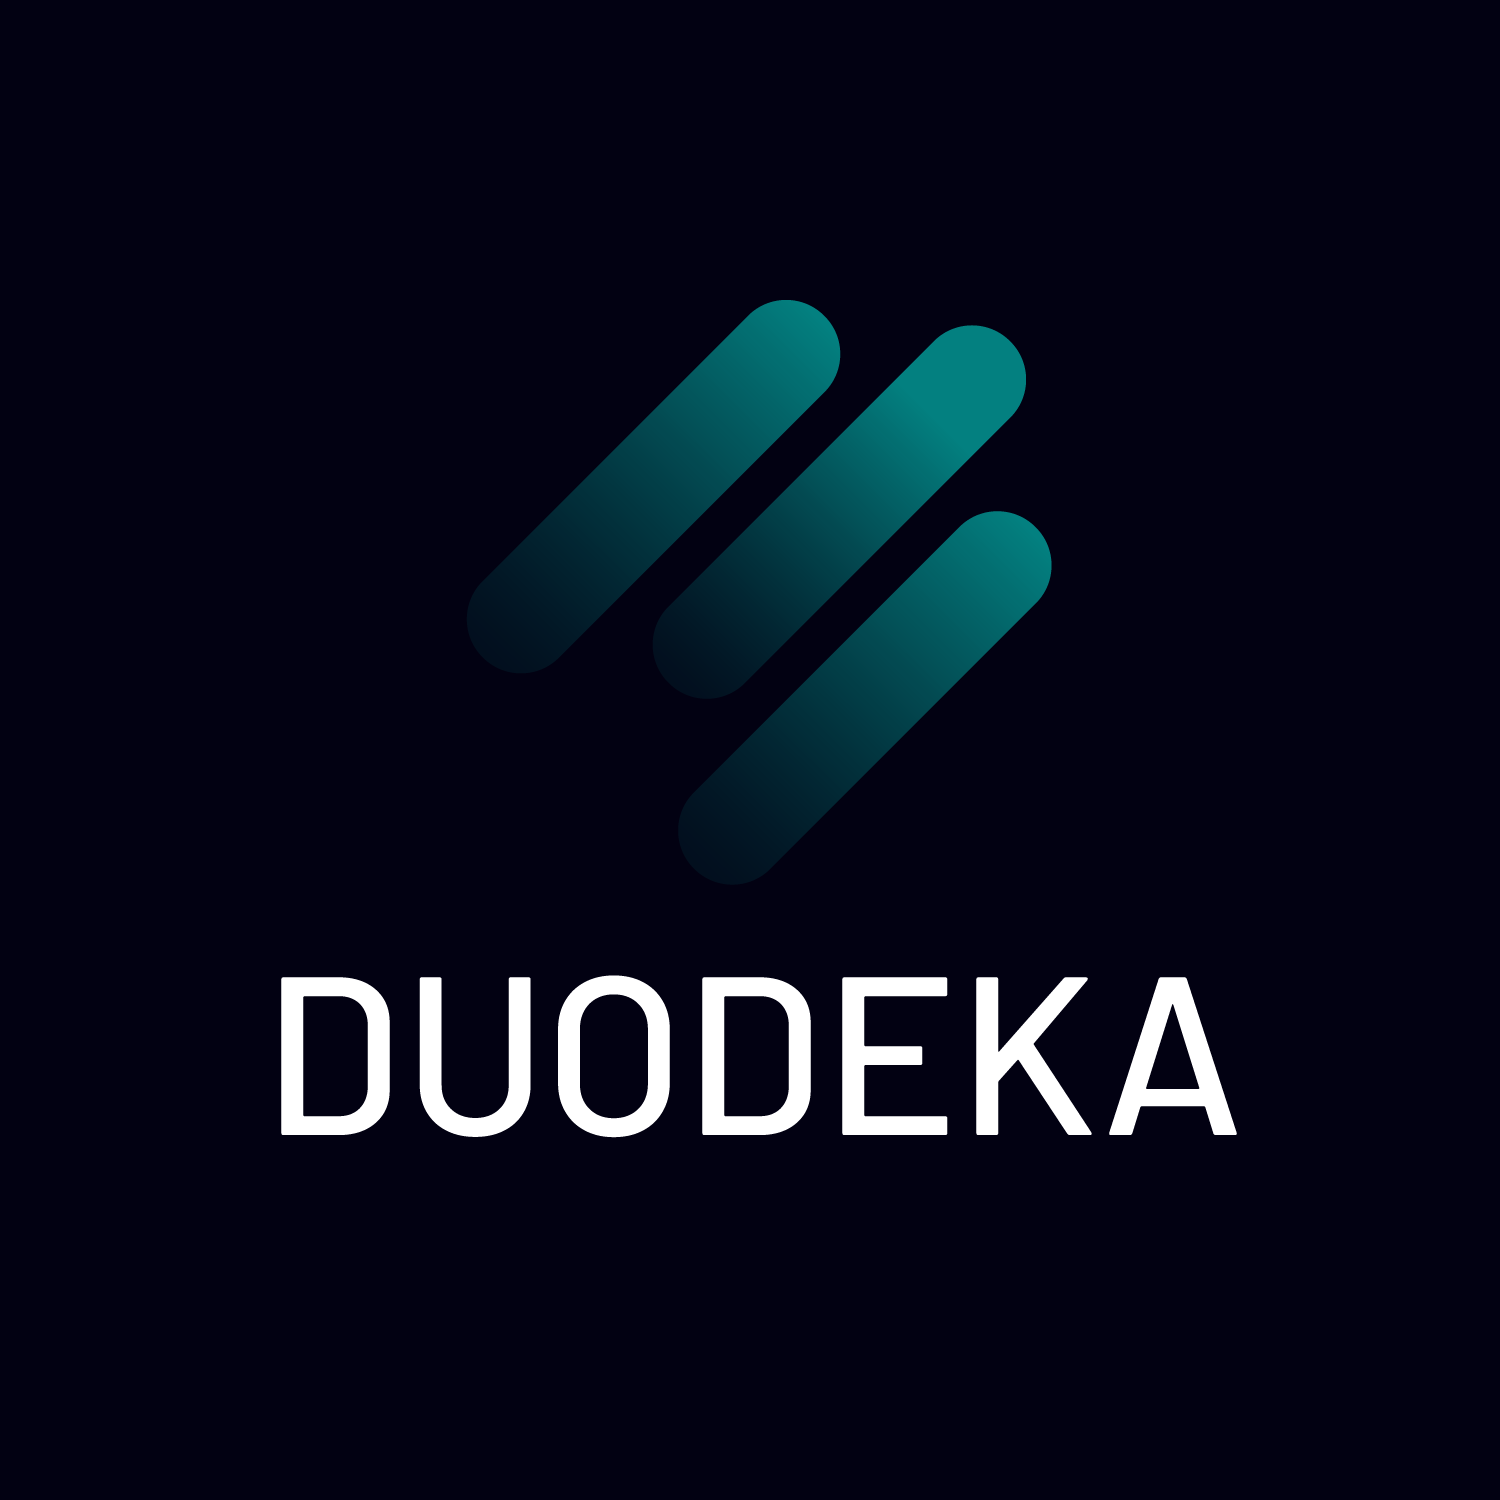 Duodeka Venture Builder has all skills in-house